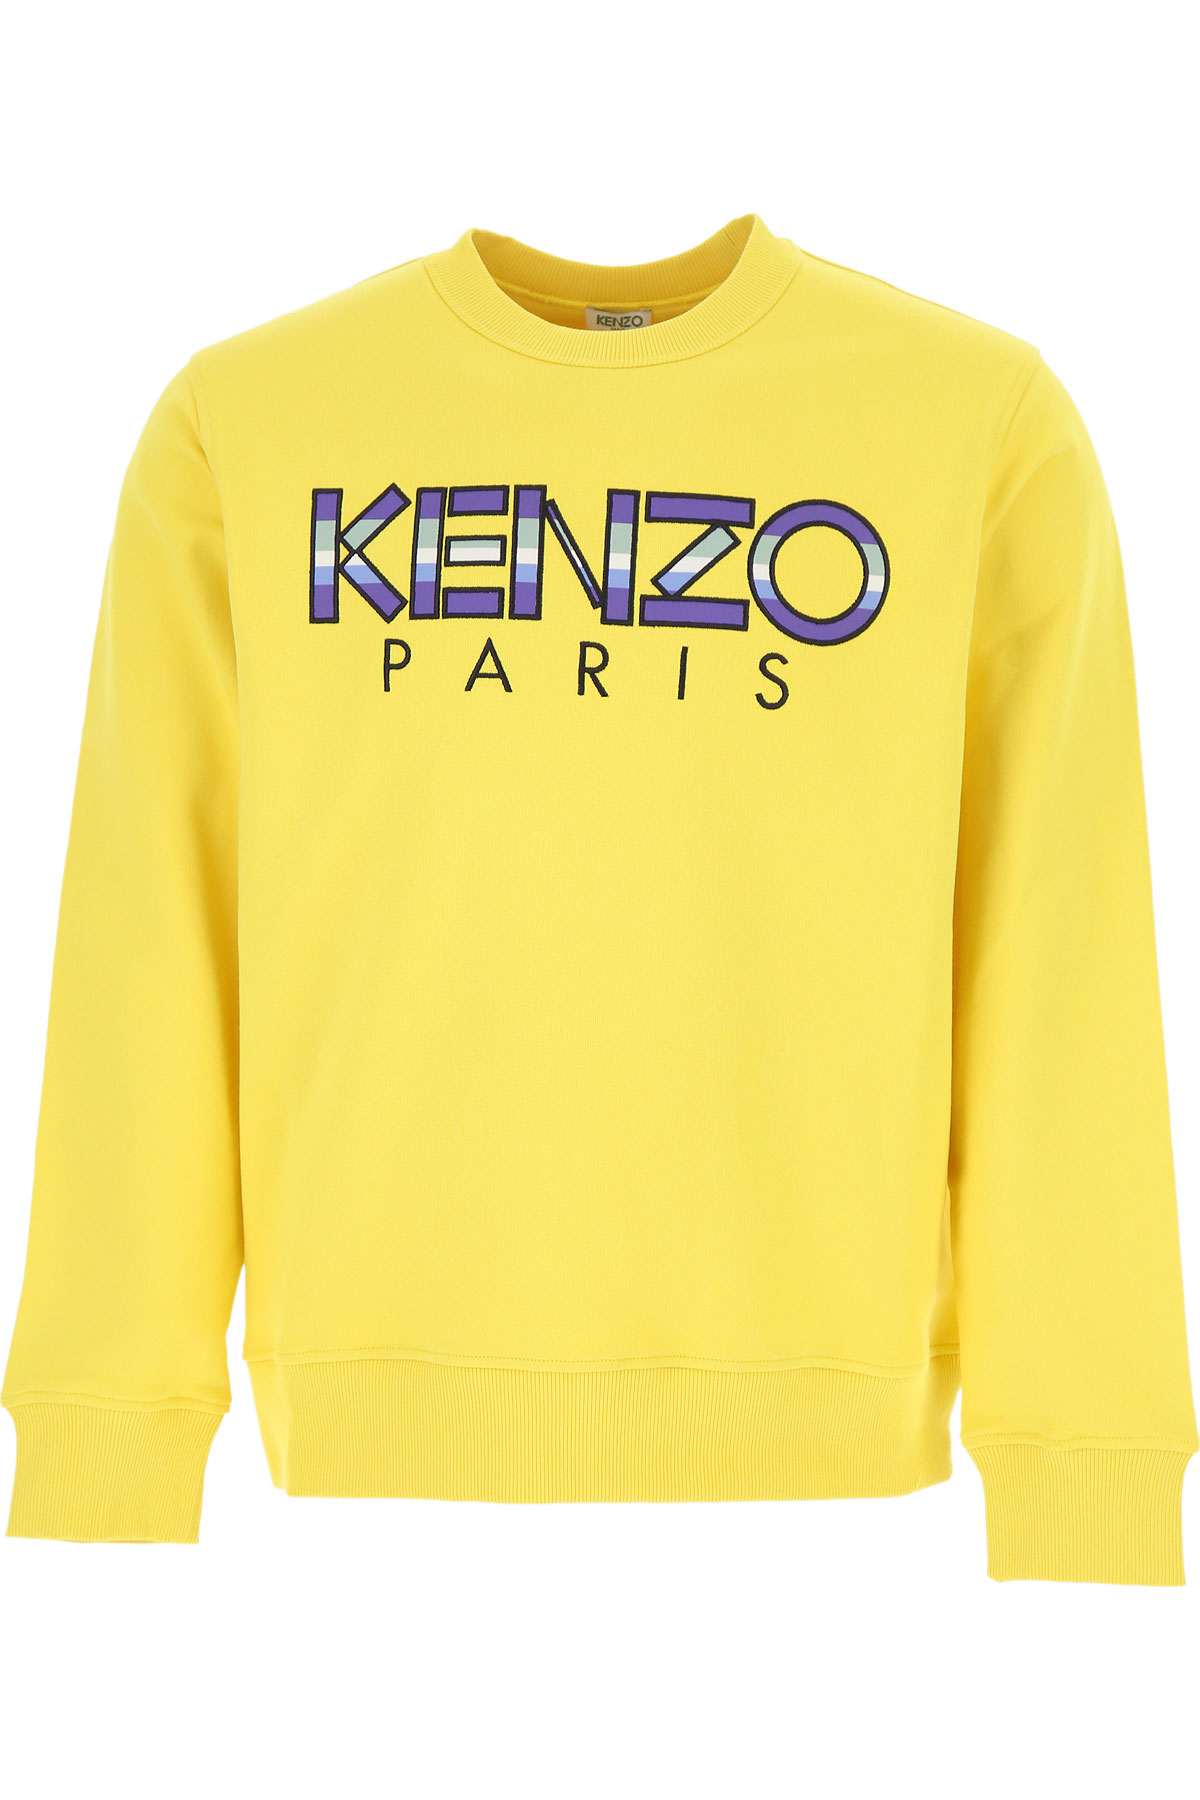 kenzo jumper yellow